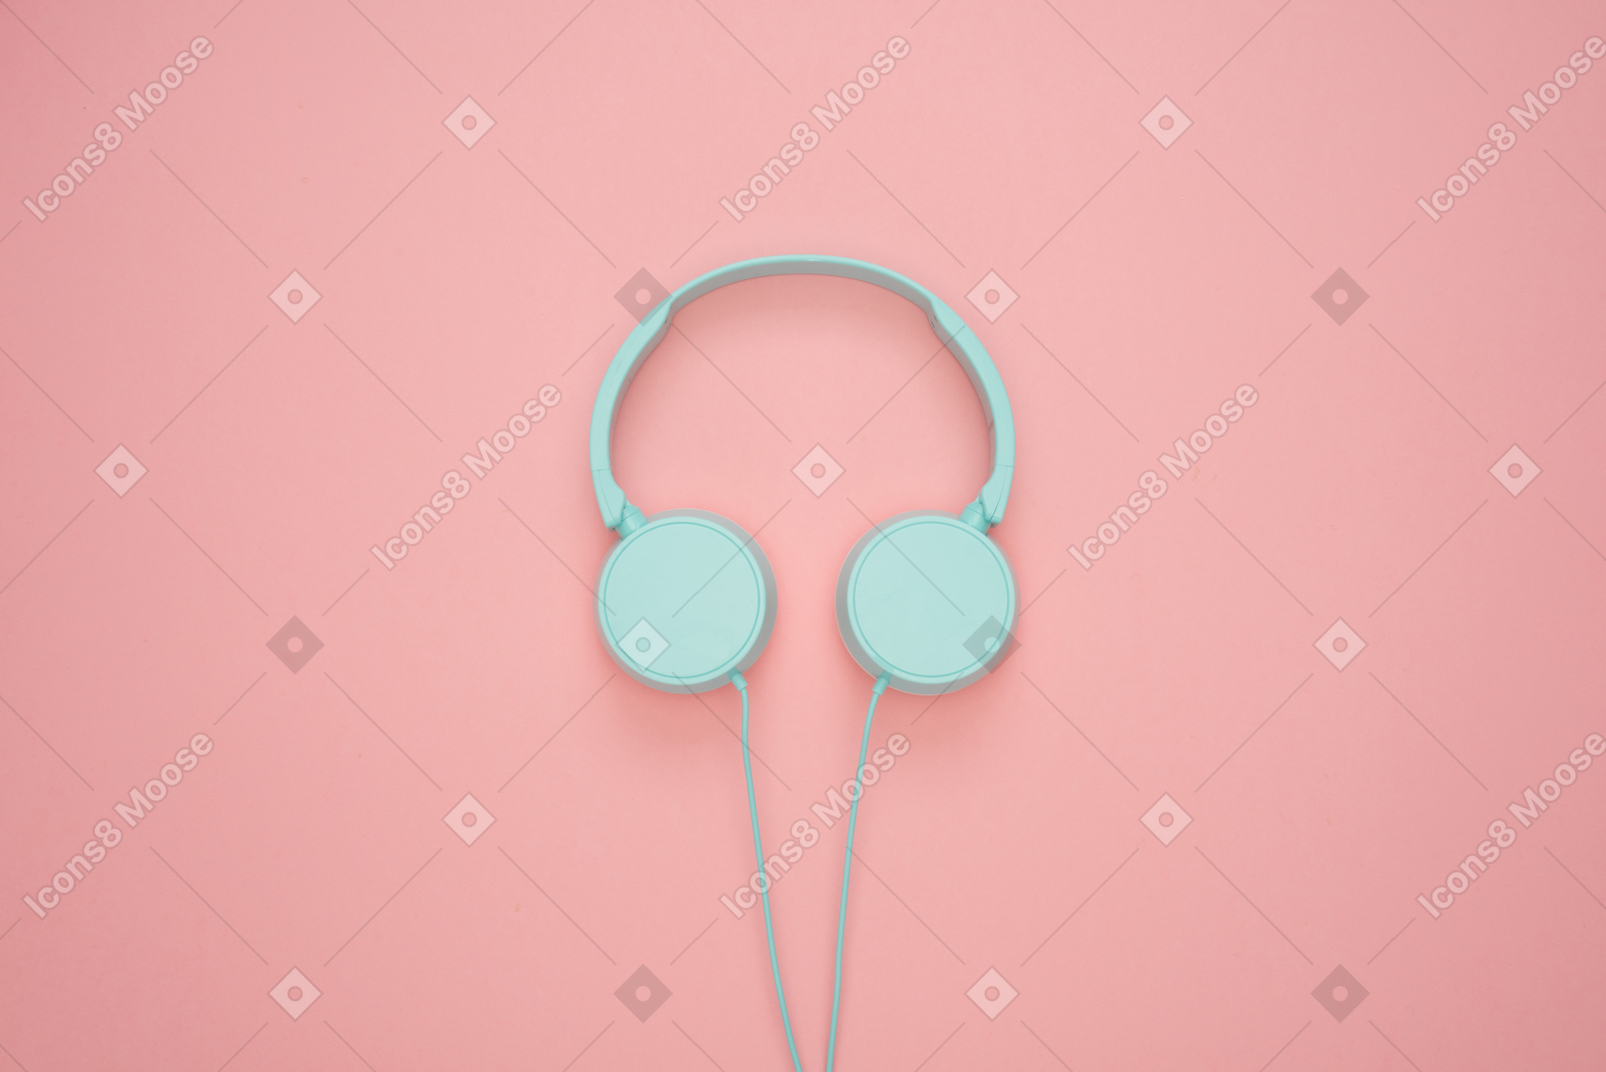 Blue headphones over pink pastel background